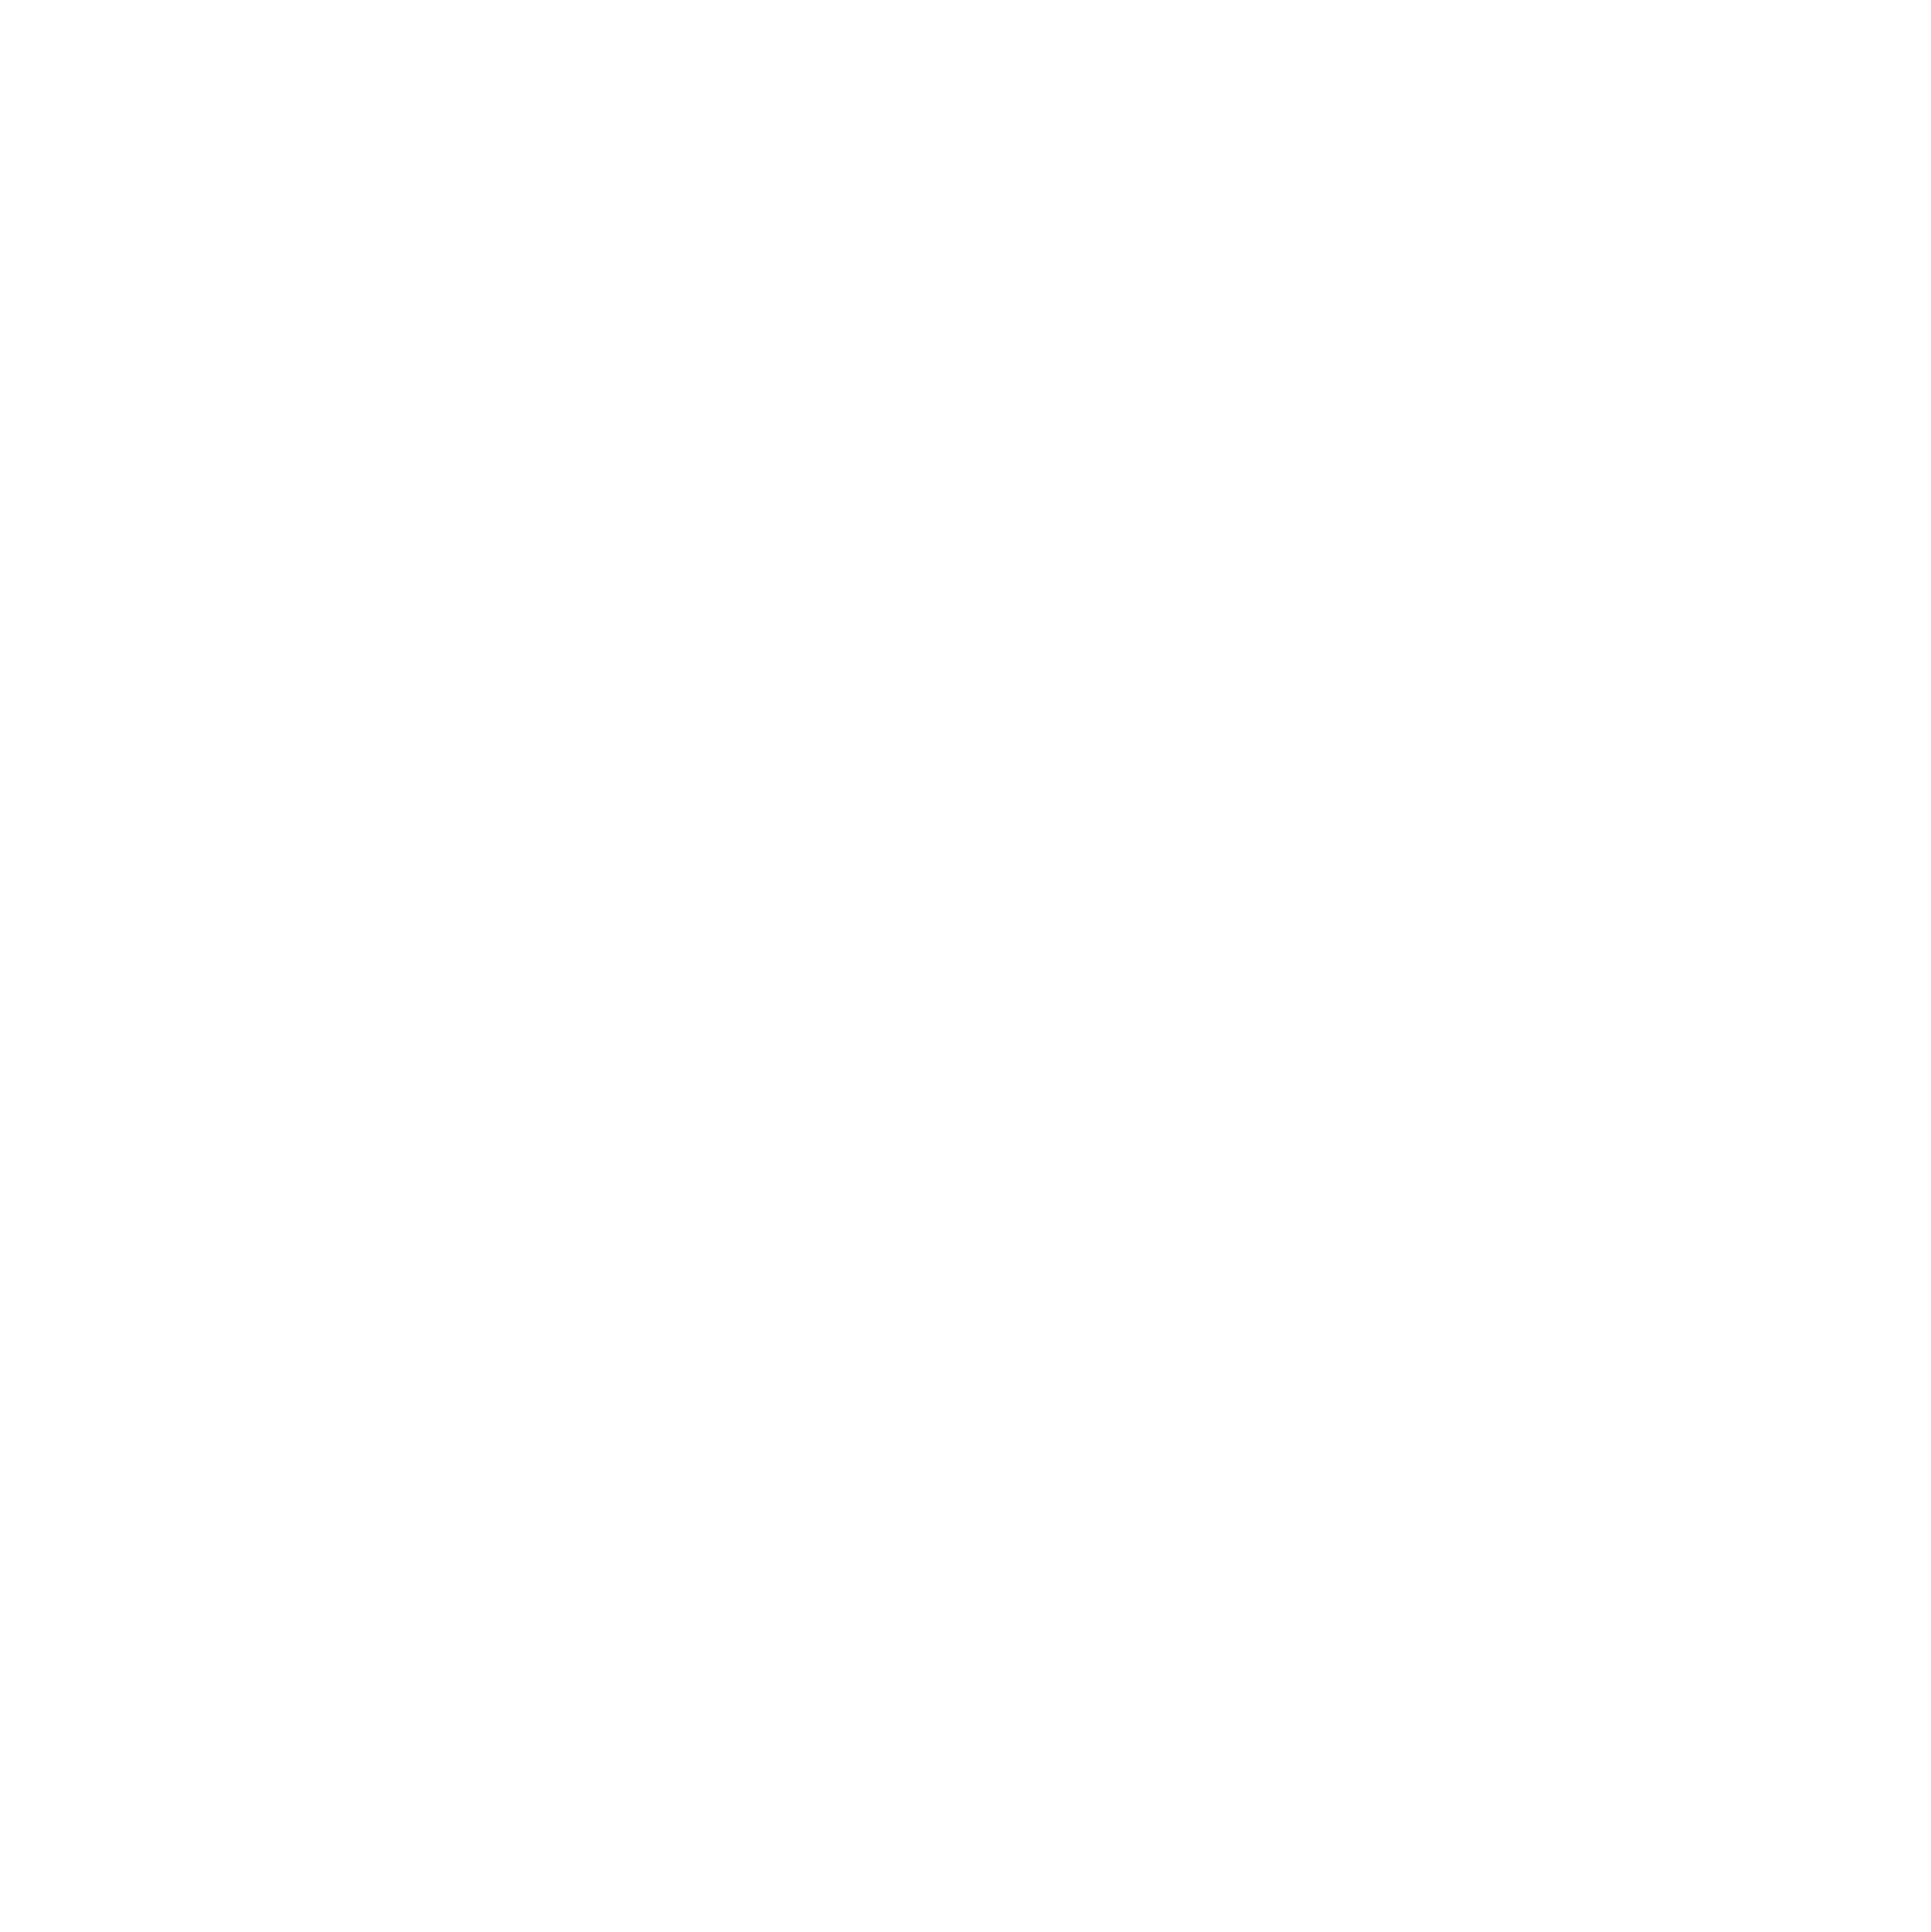 Tishmal